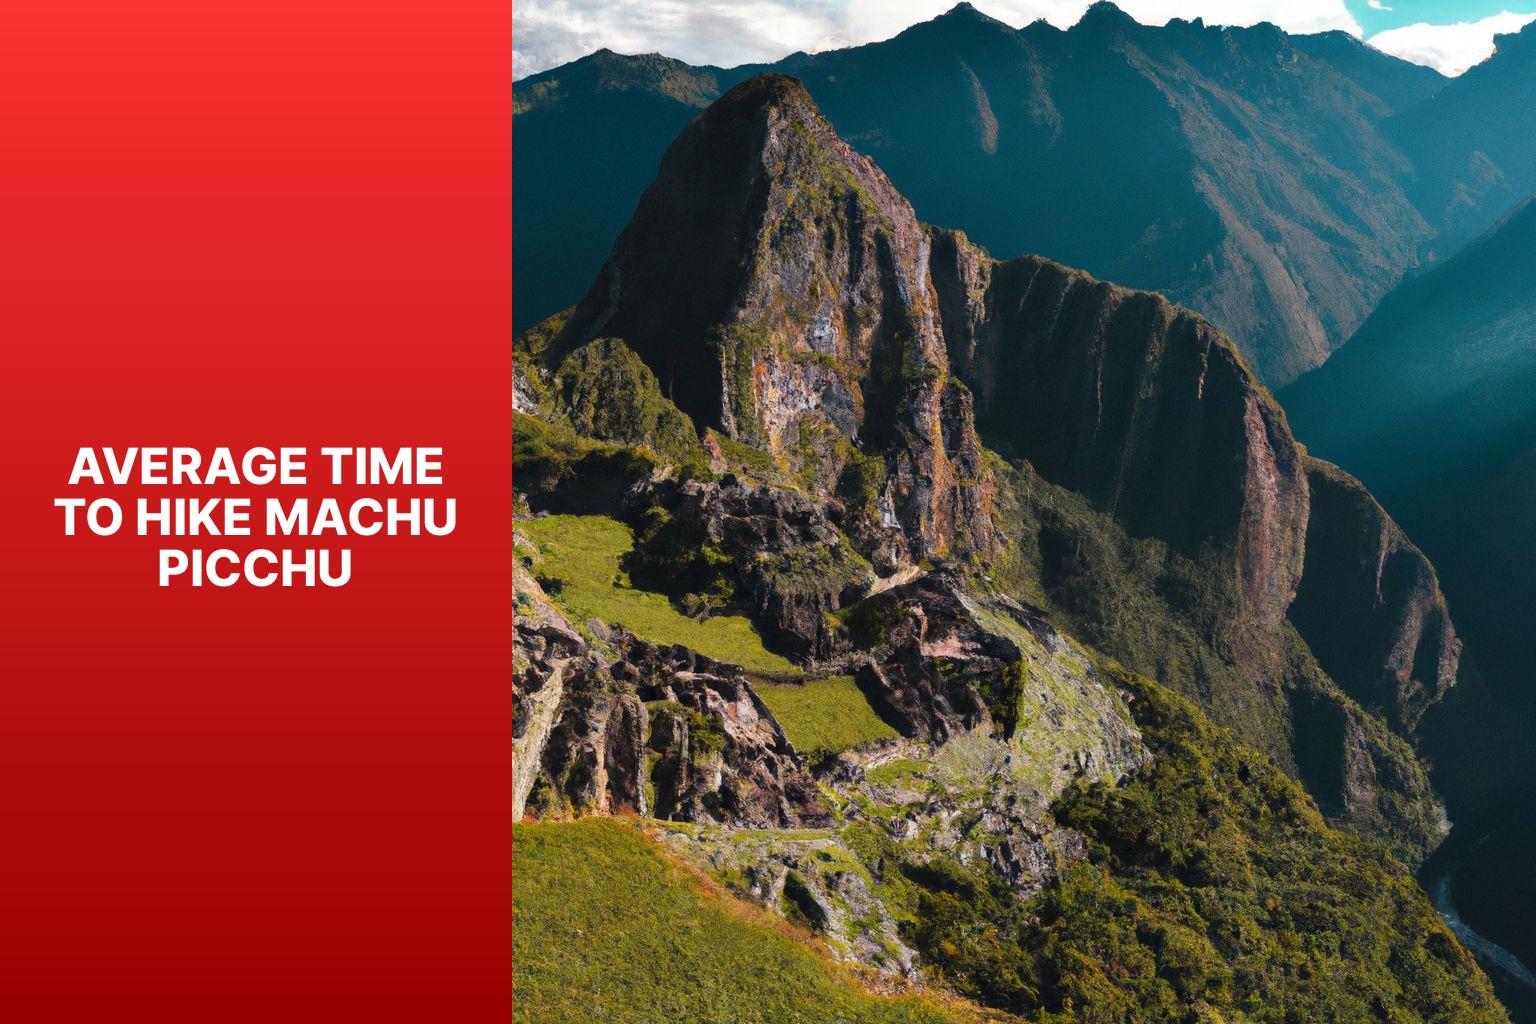 Average Time to Hike Machu Picchu - How Long Does It Take to Hike Machu Picchu 